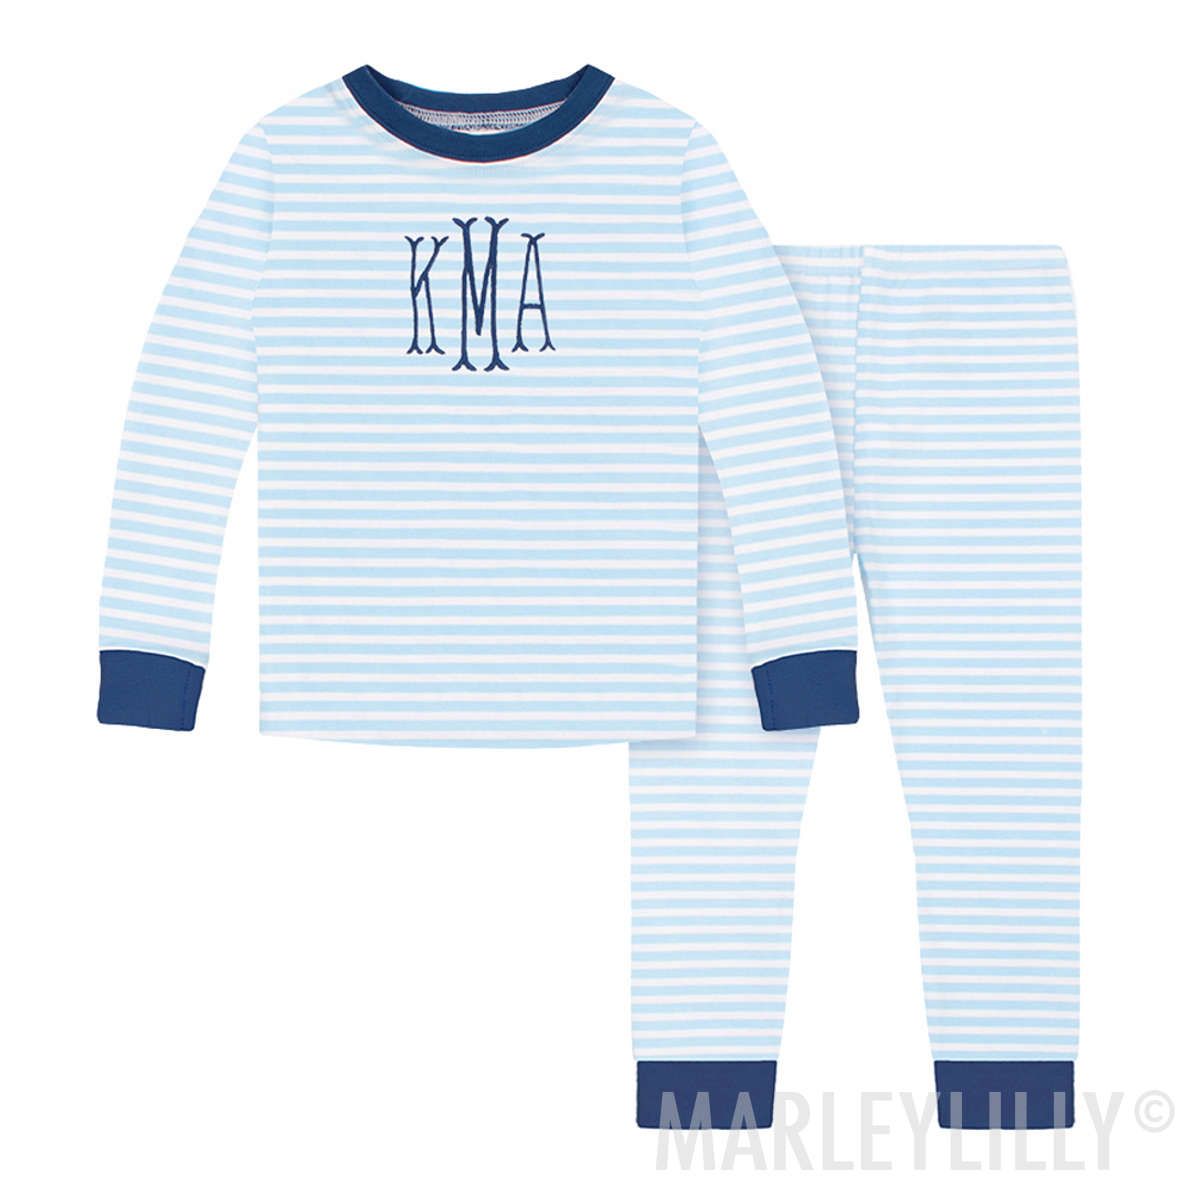 Monogrammed Kids Pajamas | Marleylilly